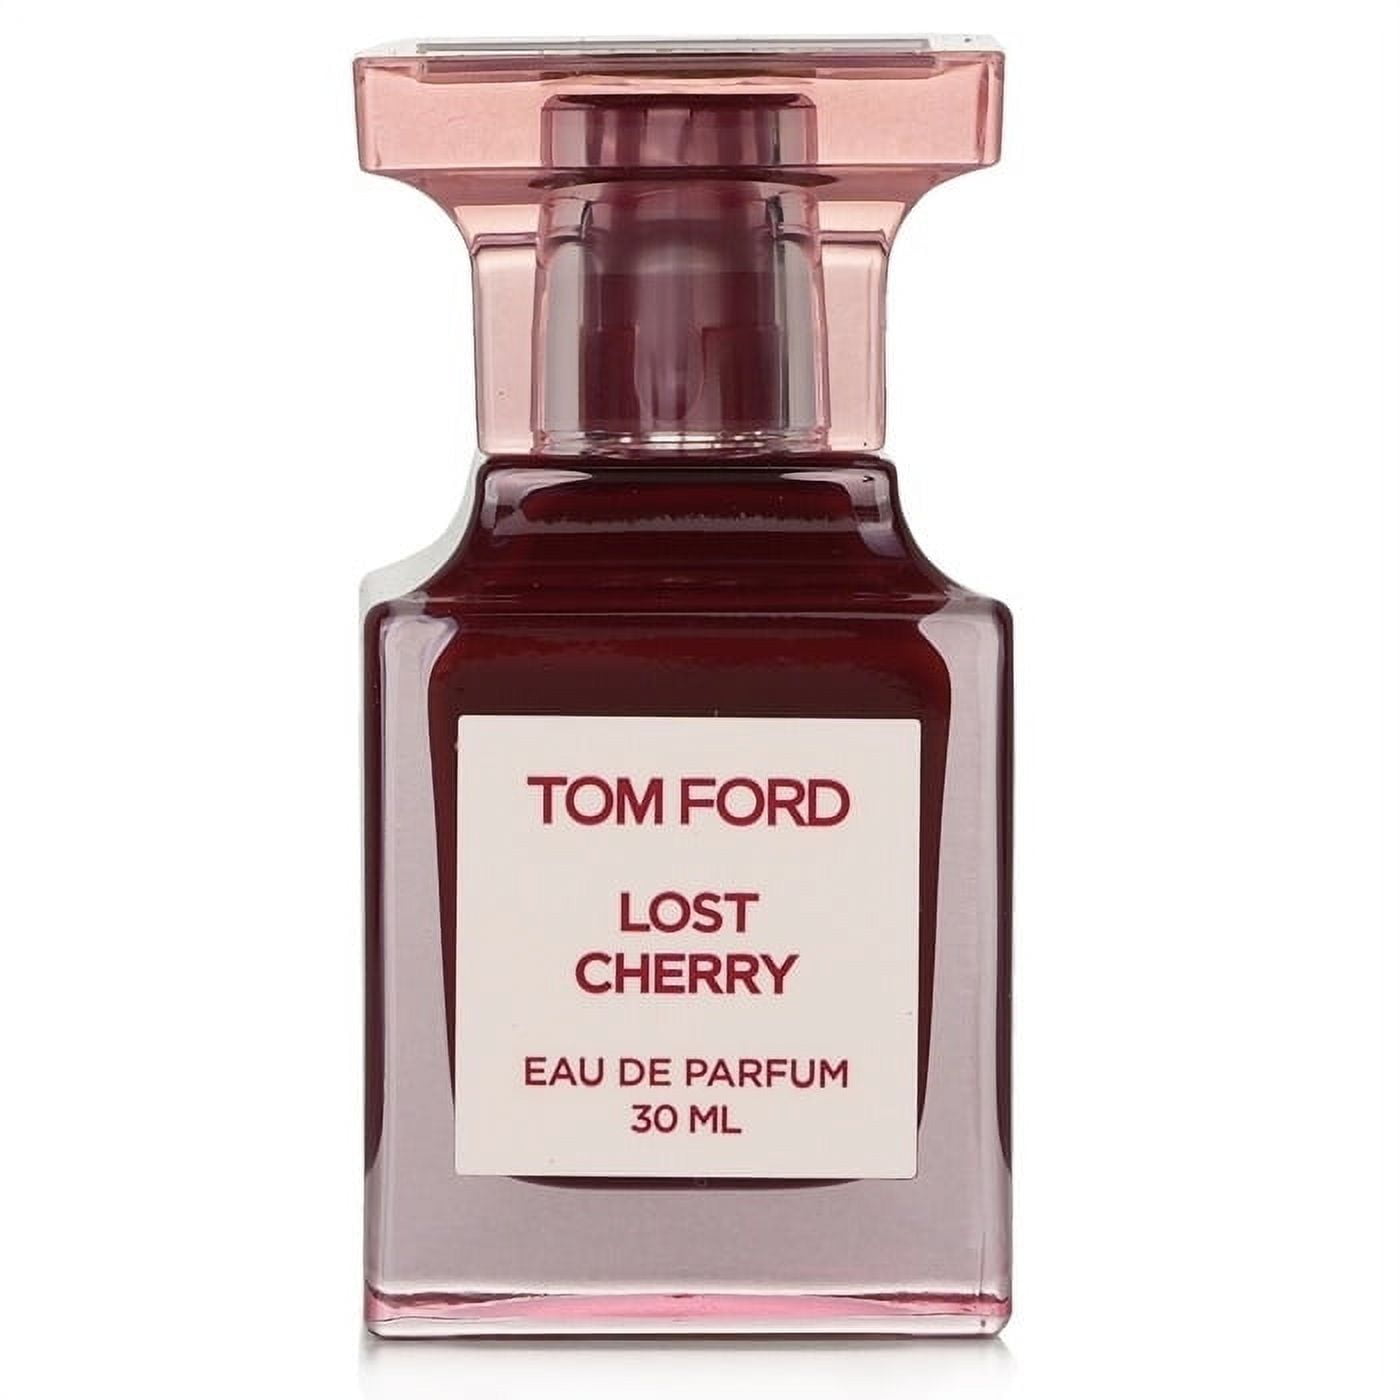 Lost Cherry Eau De Parfum - TOM FORD - Smith & Caughey's - Smith